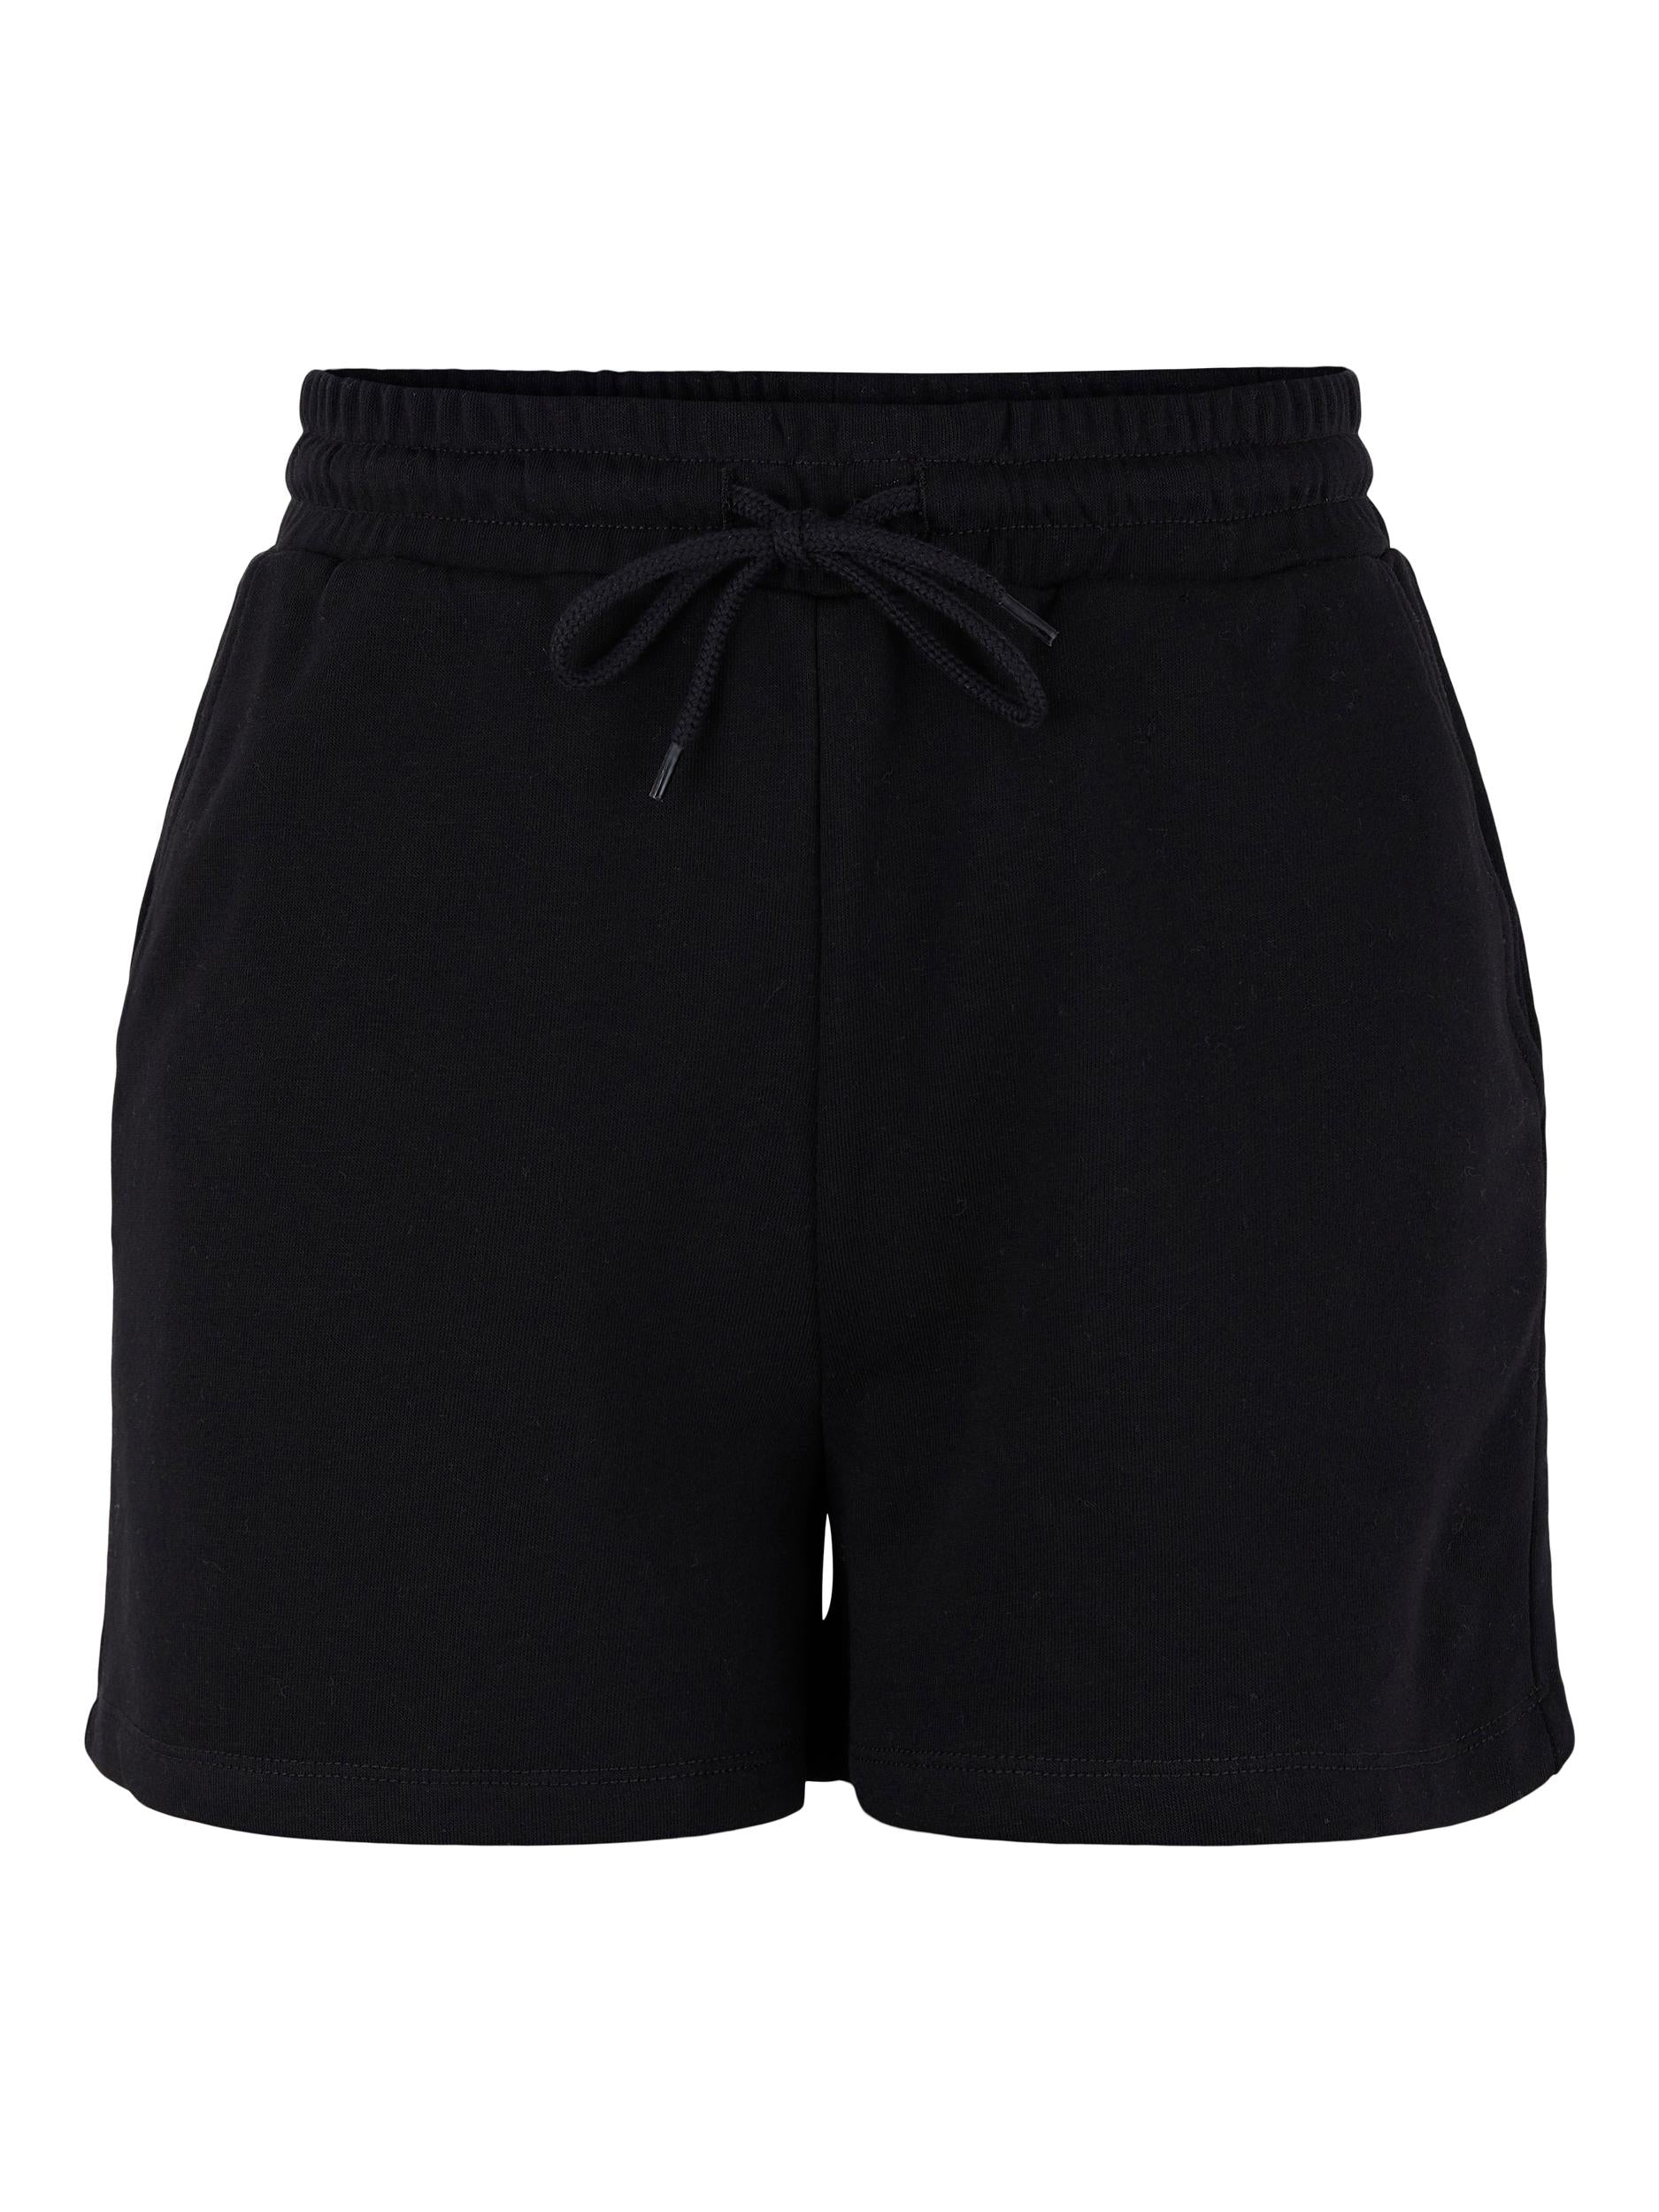 Pieces Chilli Summer shorts - Black